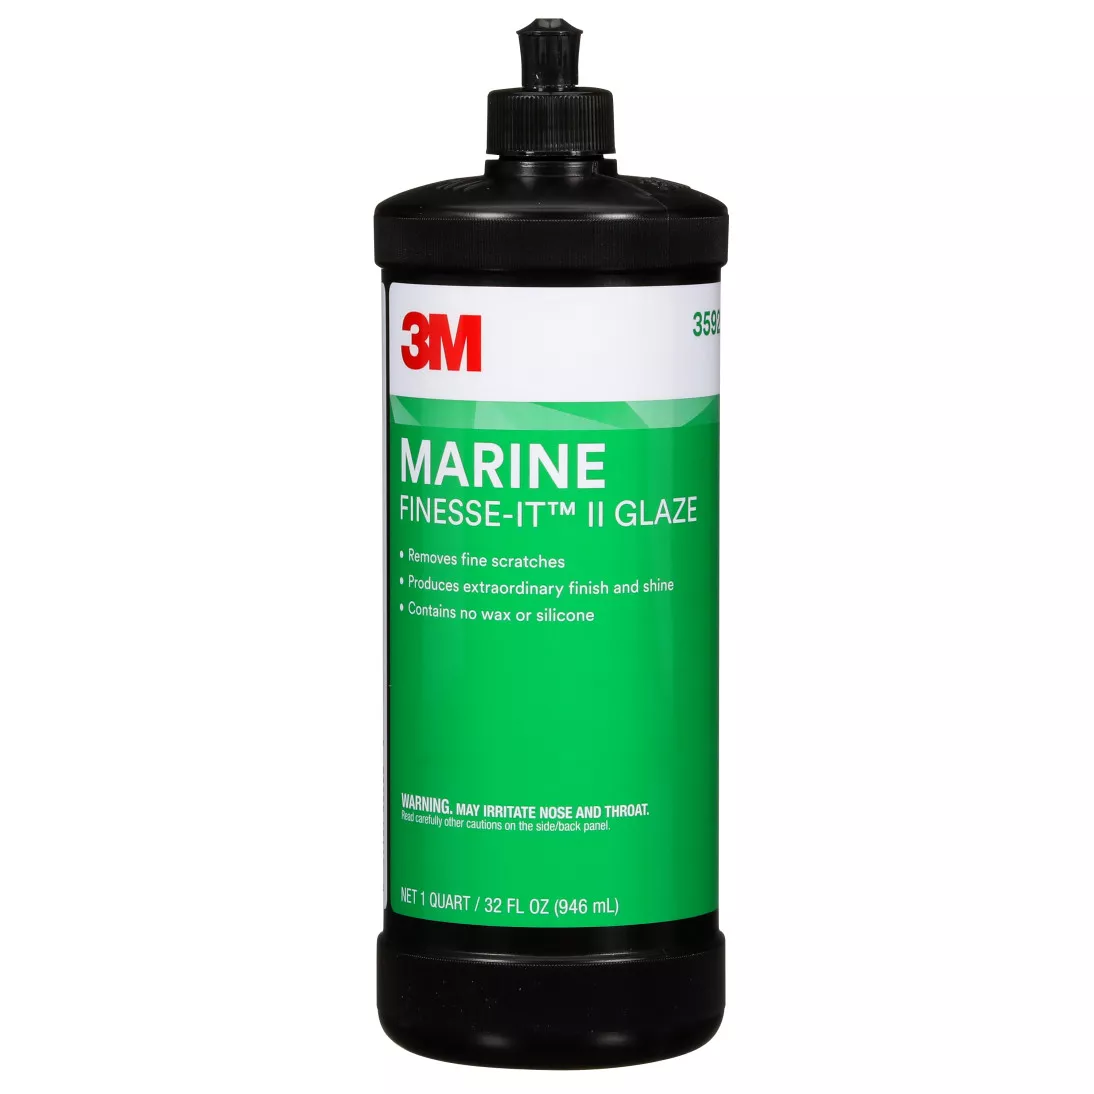 3M™ Marine Finesse-it™ II Glaze, 35928, 1 qt (32 fl oz/946 mL), 6 per
case